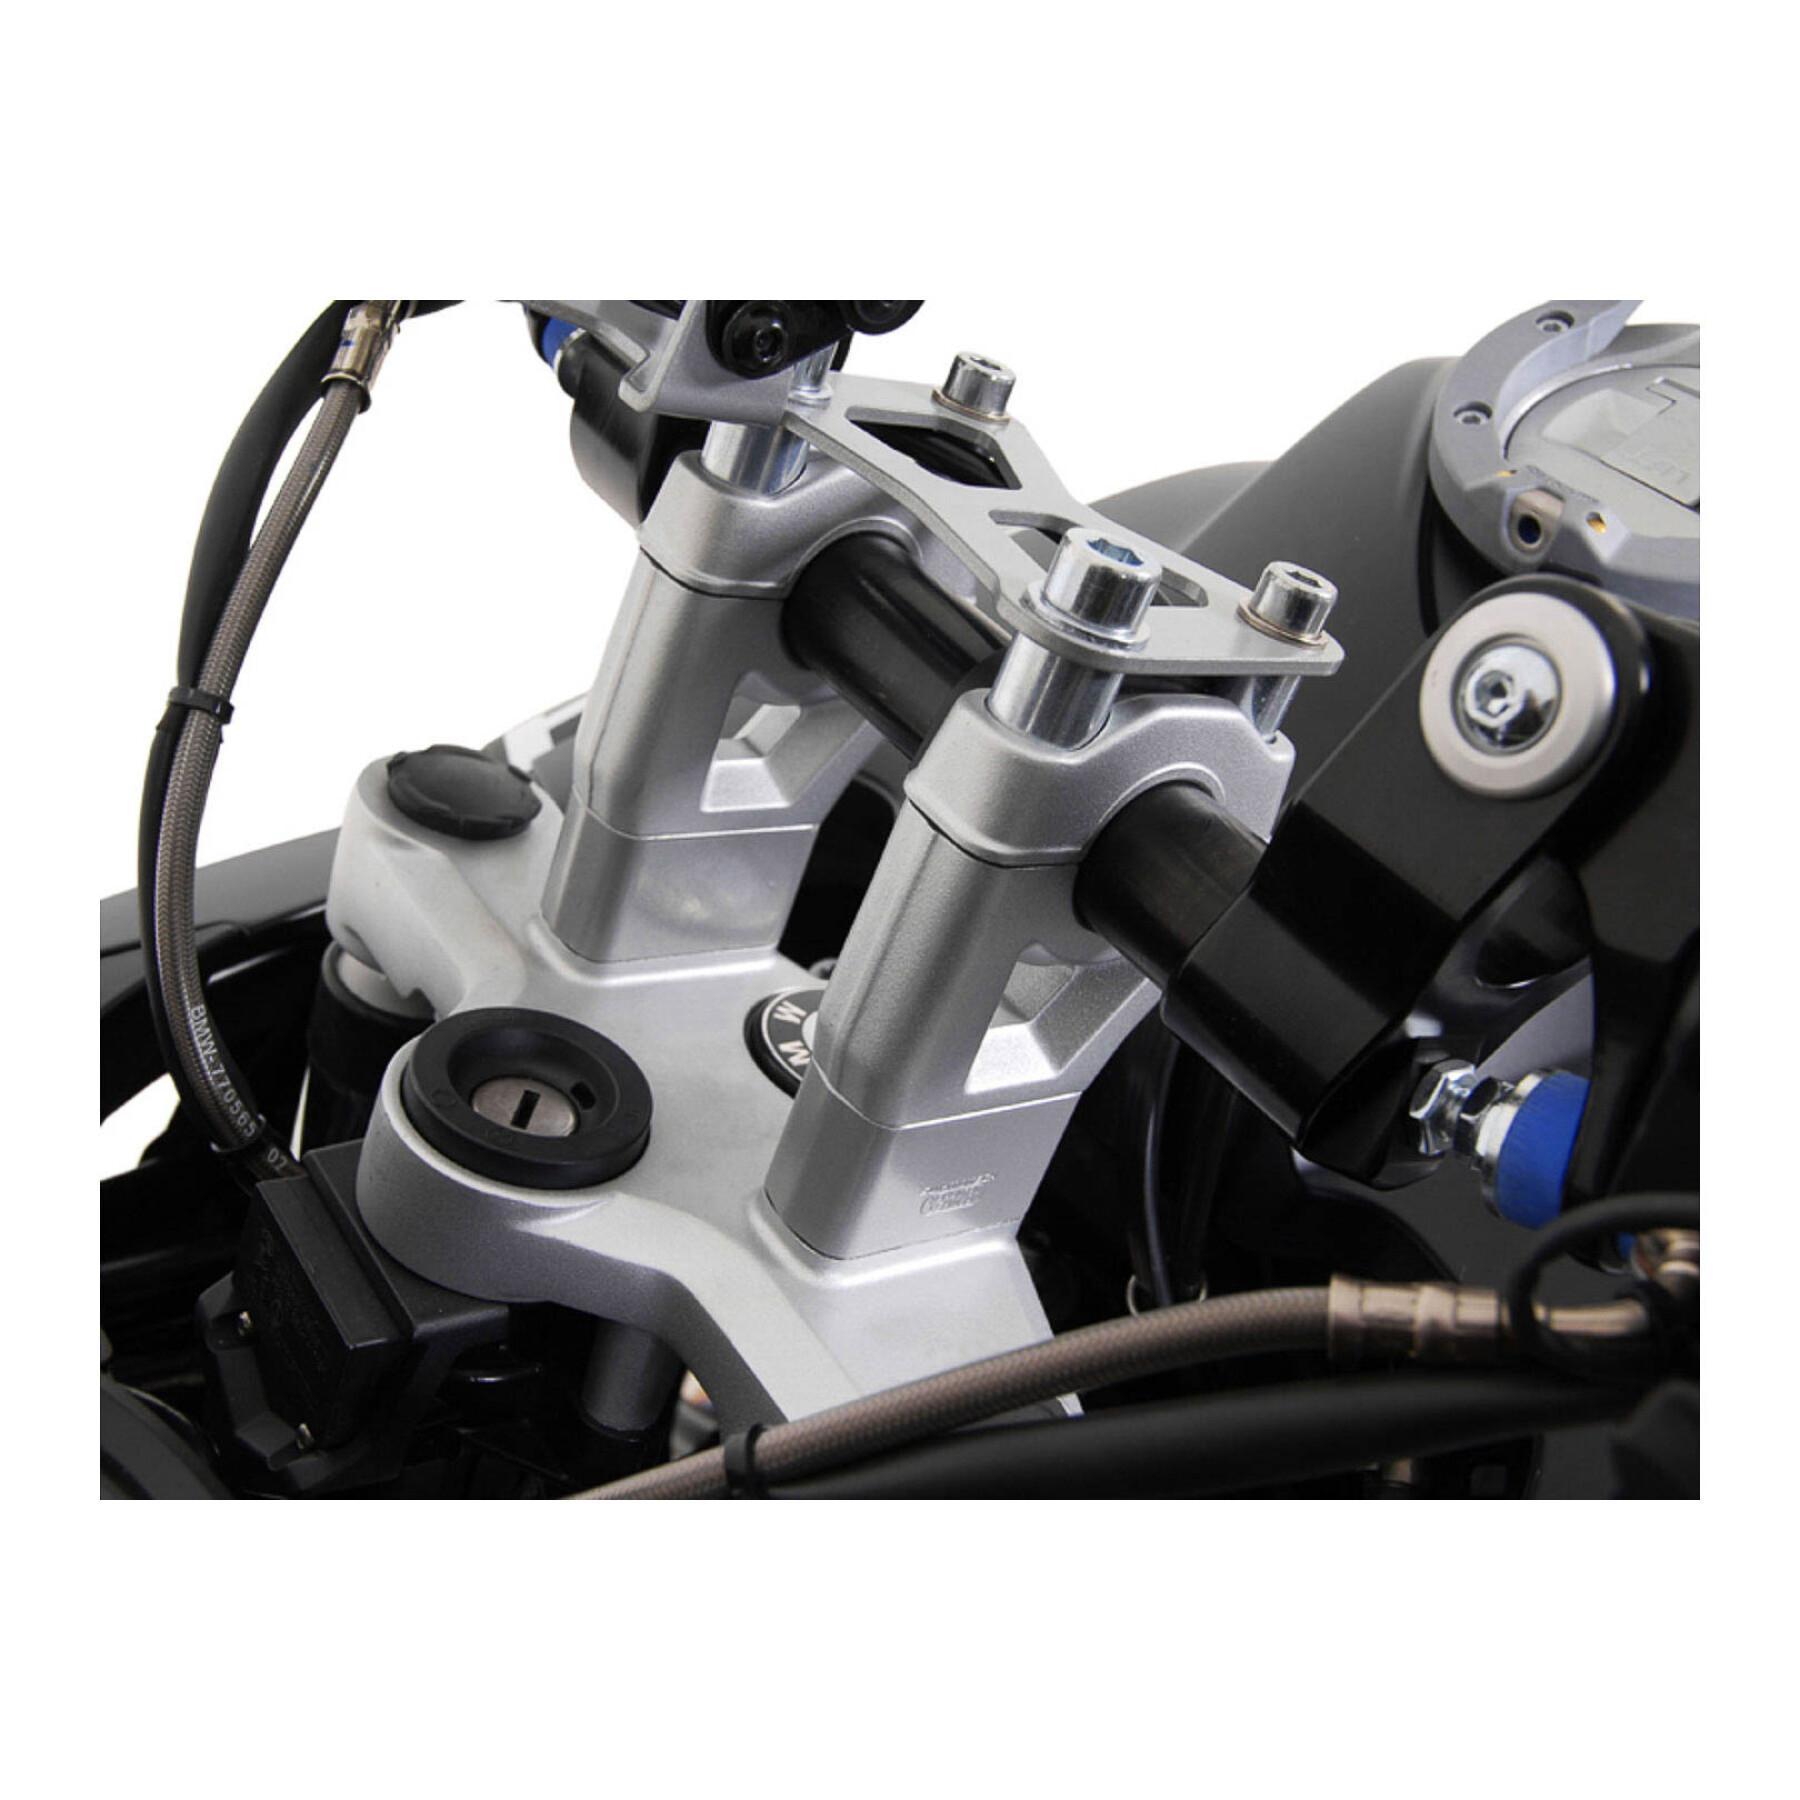 Estensioni manubrio moto h30 mm bmw r 1200 gs (08-)SW-Motech